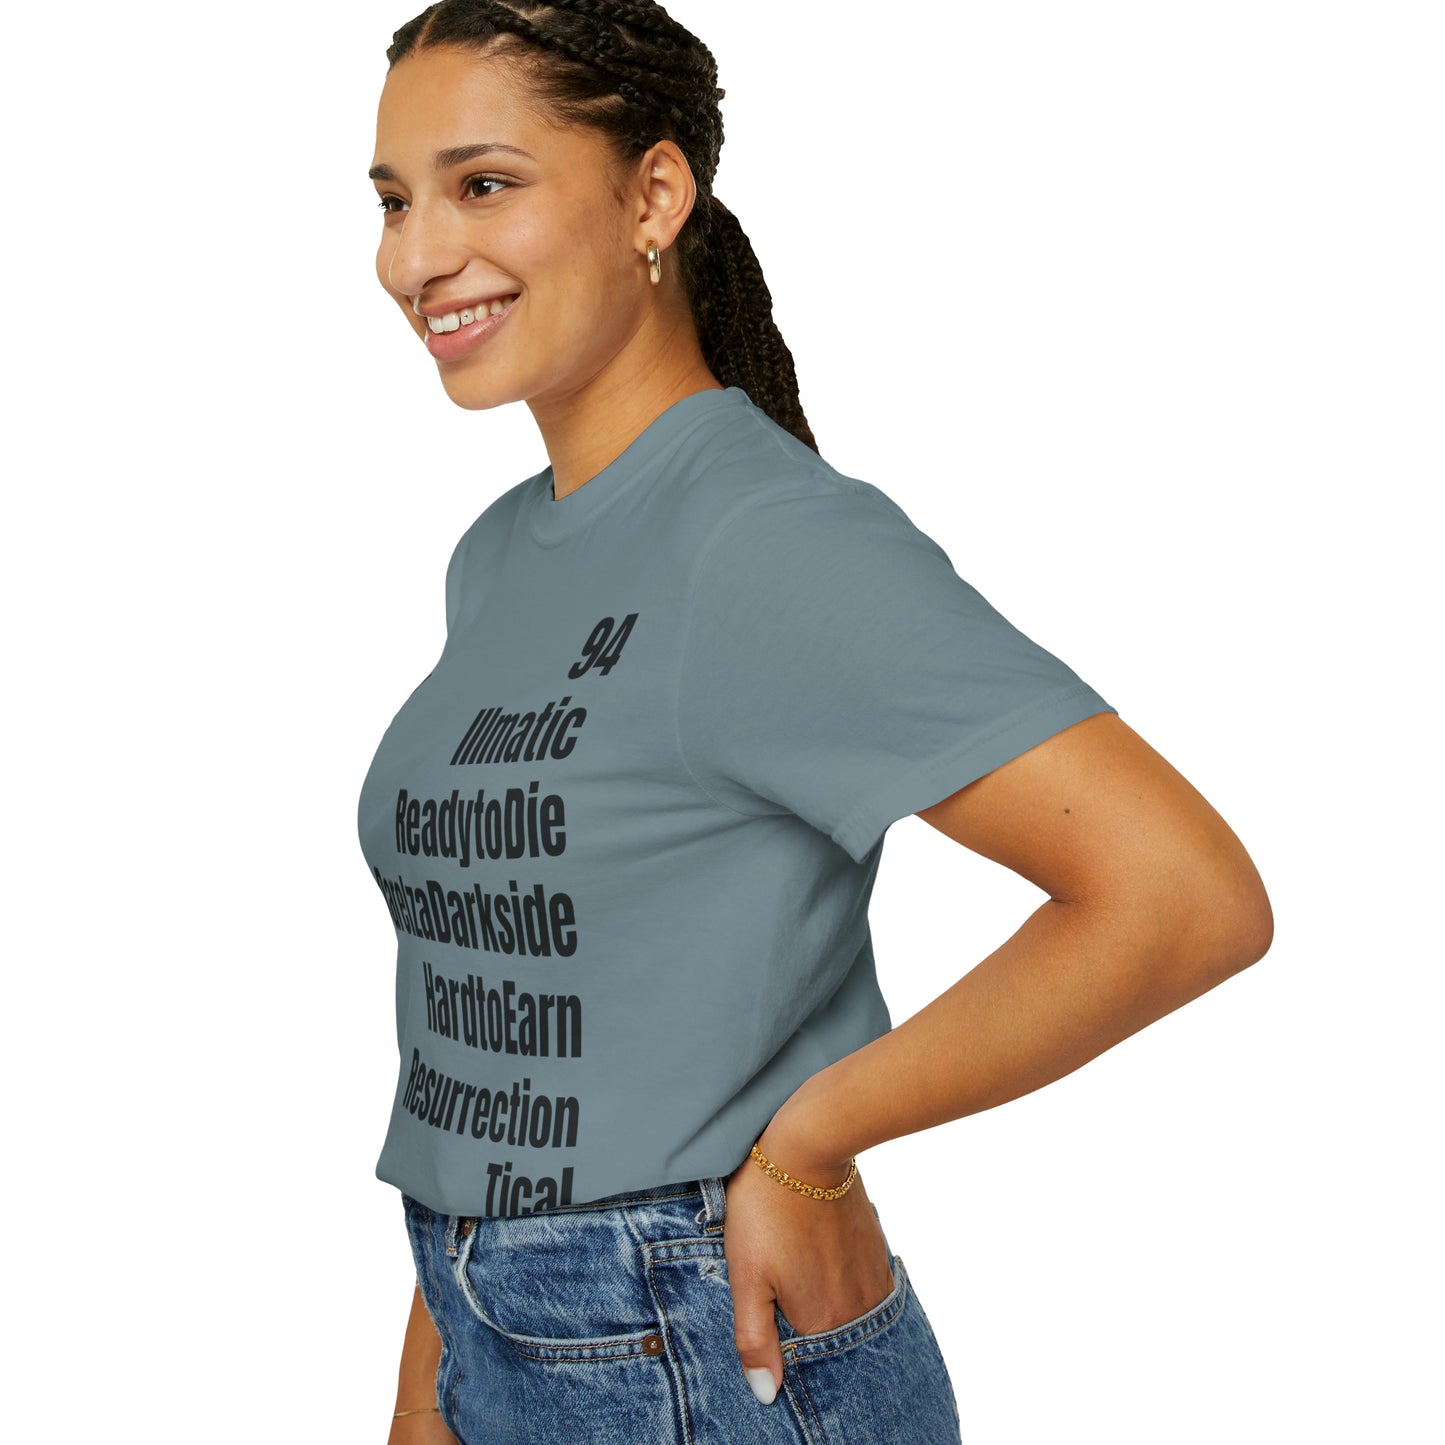 CyVision Hip Hop Spirit of 1994 Garment-Dyed T-shirt